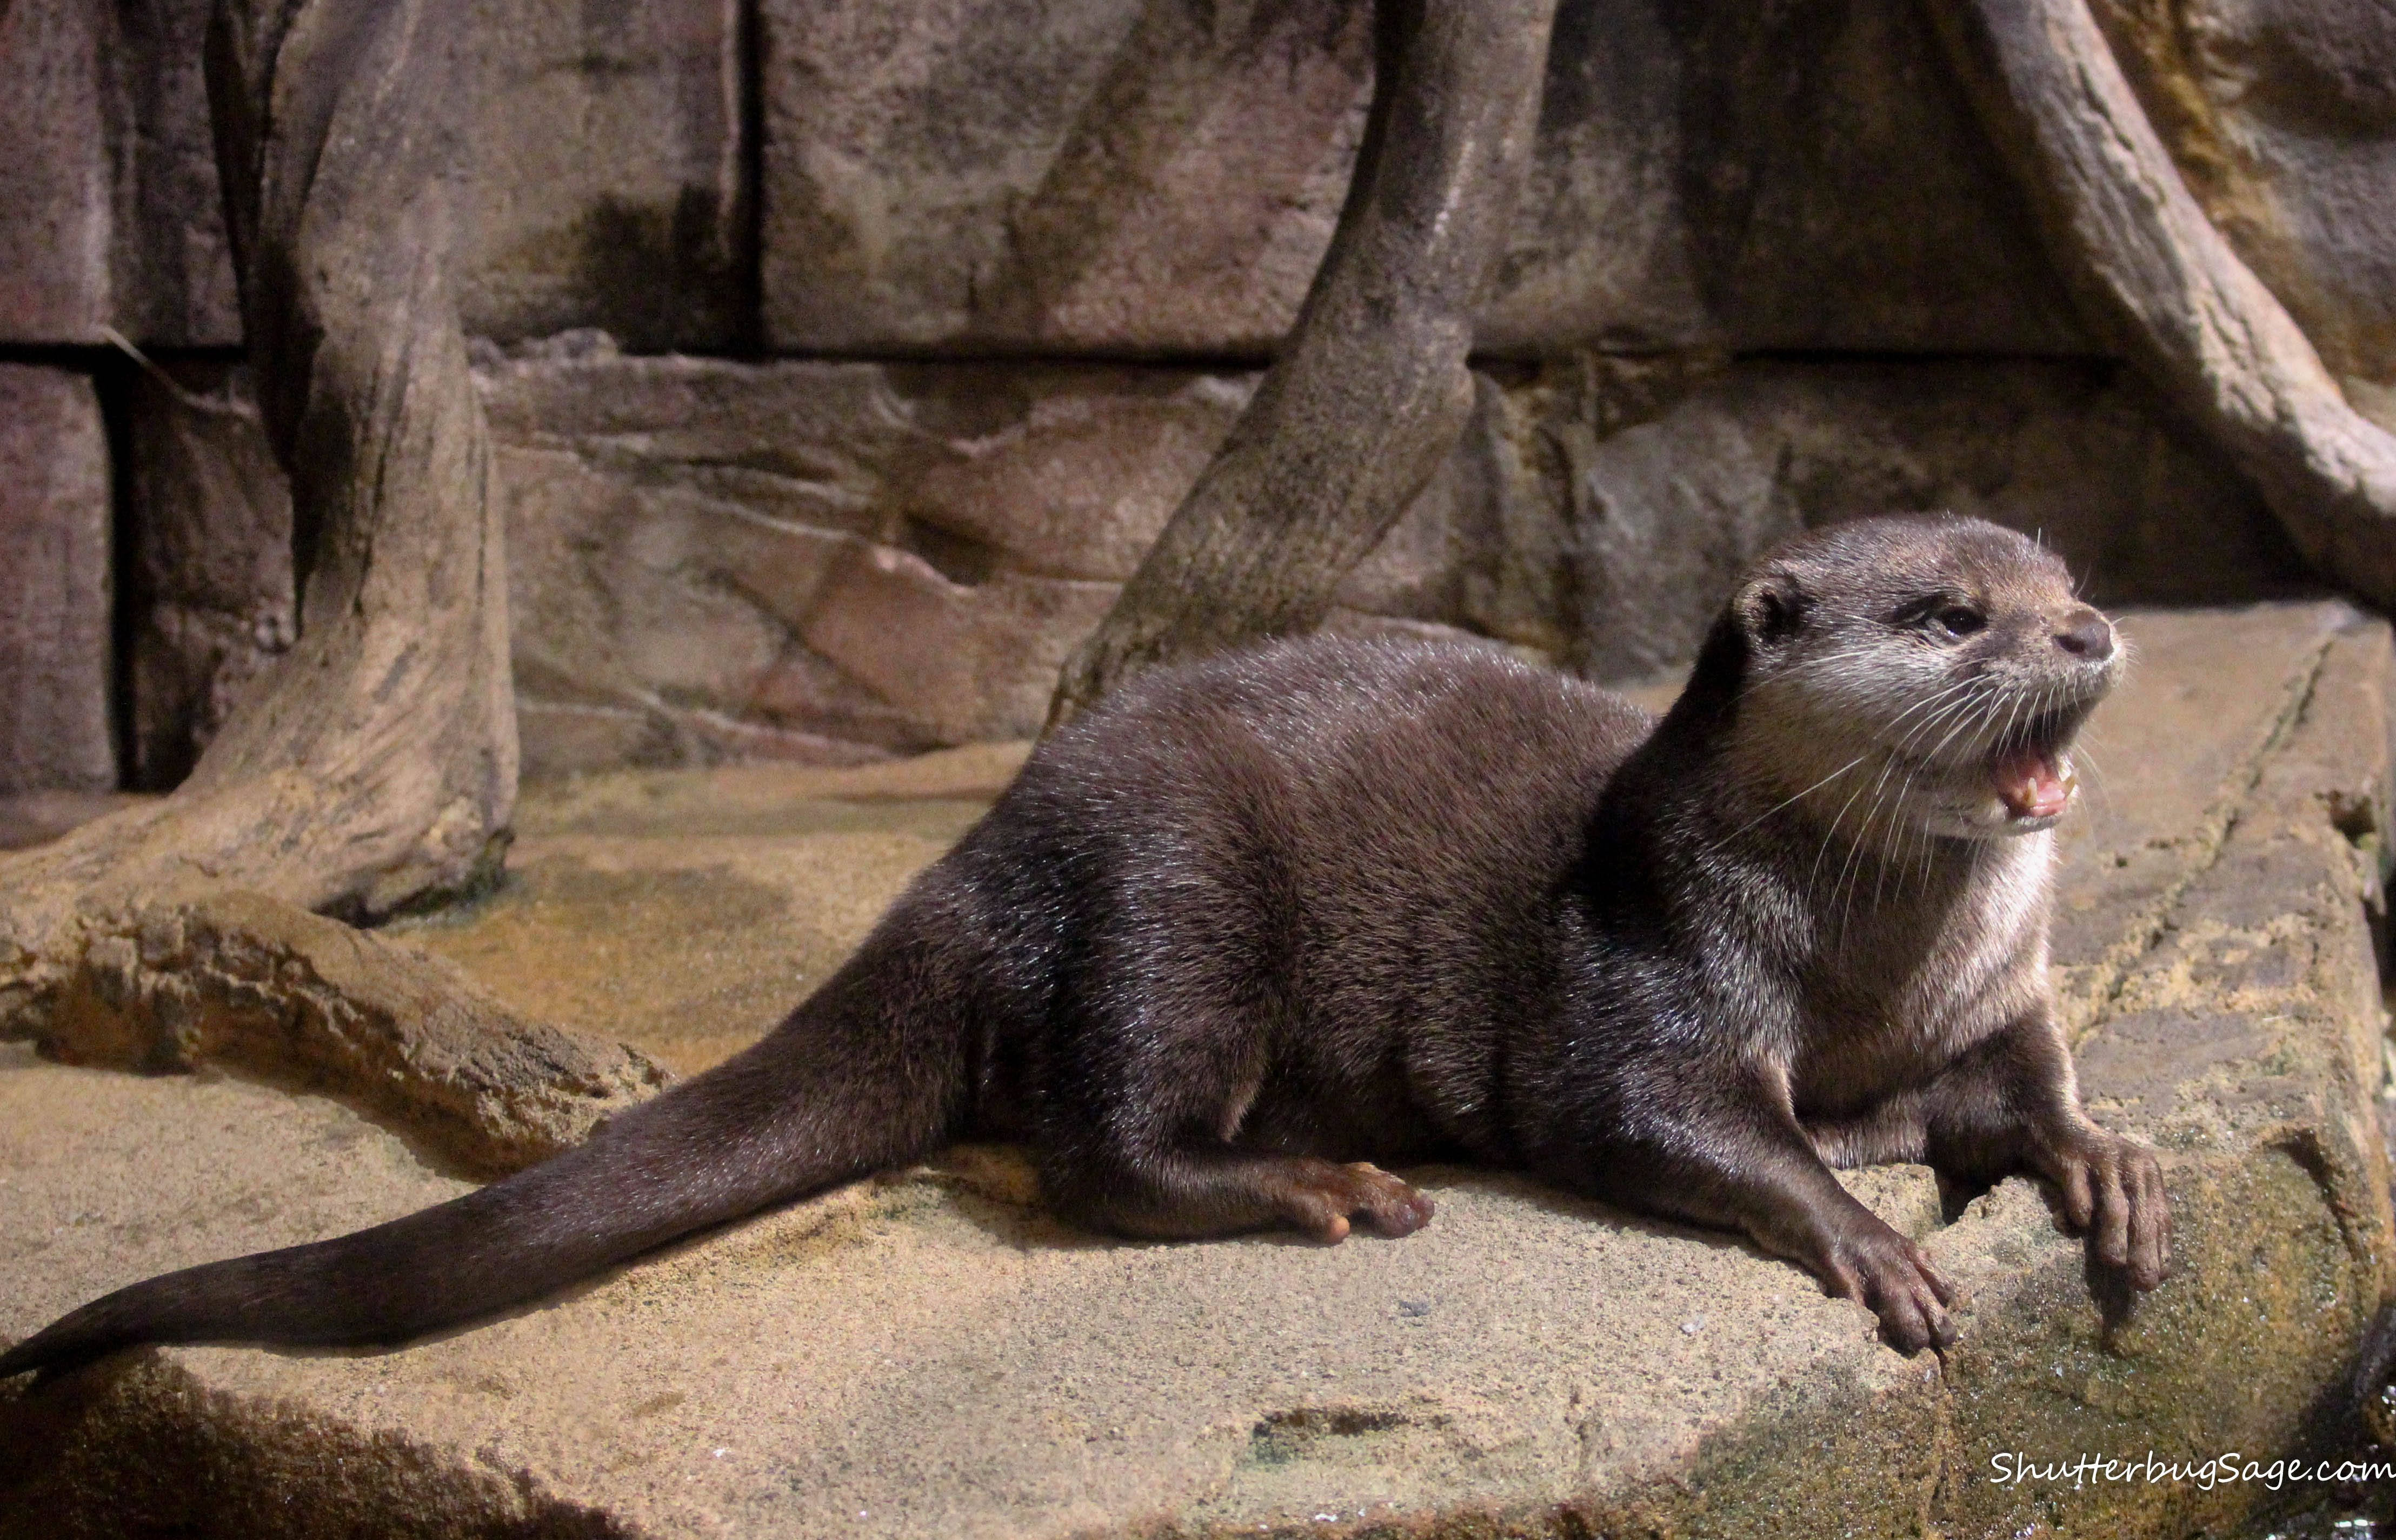 Georgia Aquarium: Asian Small-Clawed Otter | ShutterbugSage.com